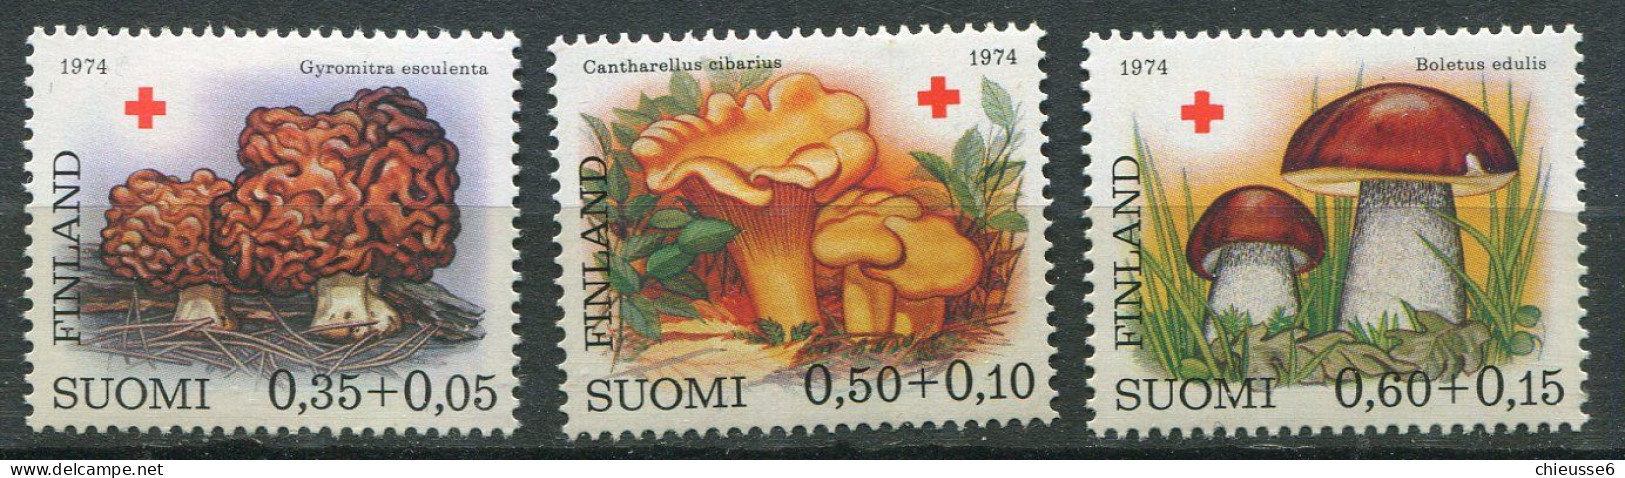 Finlande  ** N° 717 à 719 - Champignons - Croix Rouge - Unused Stamps